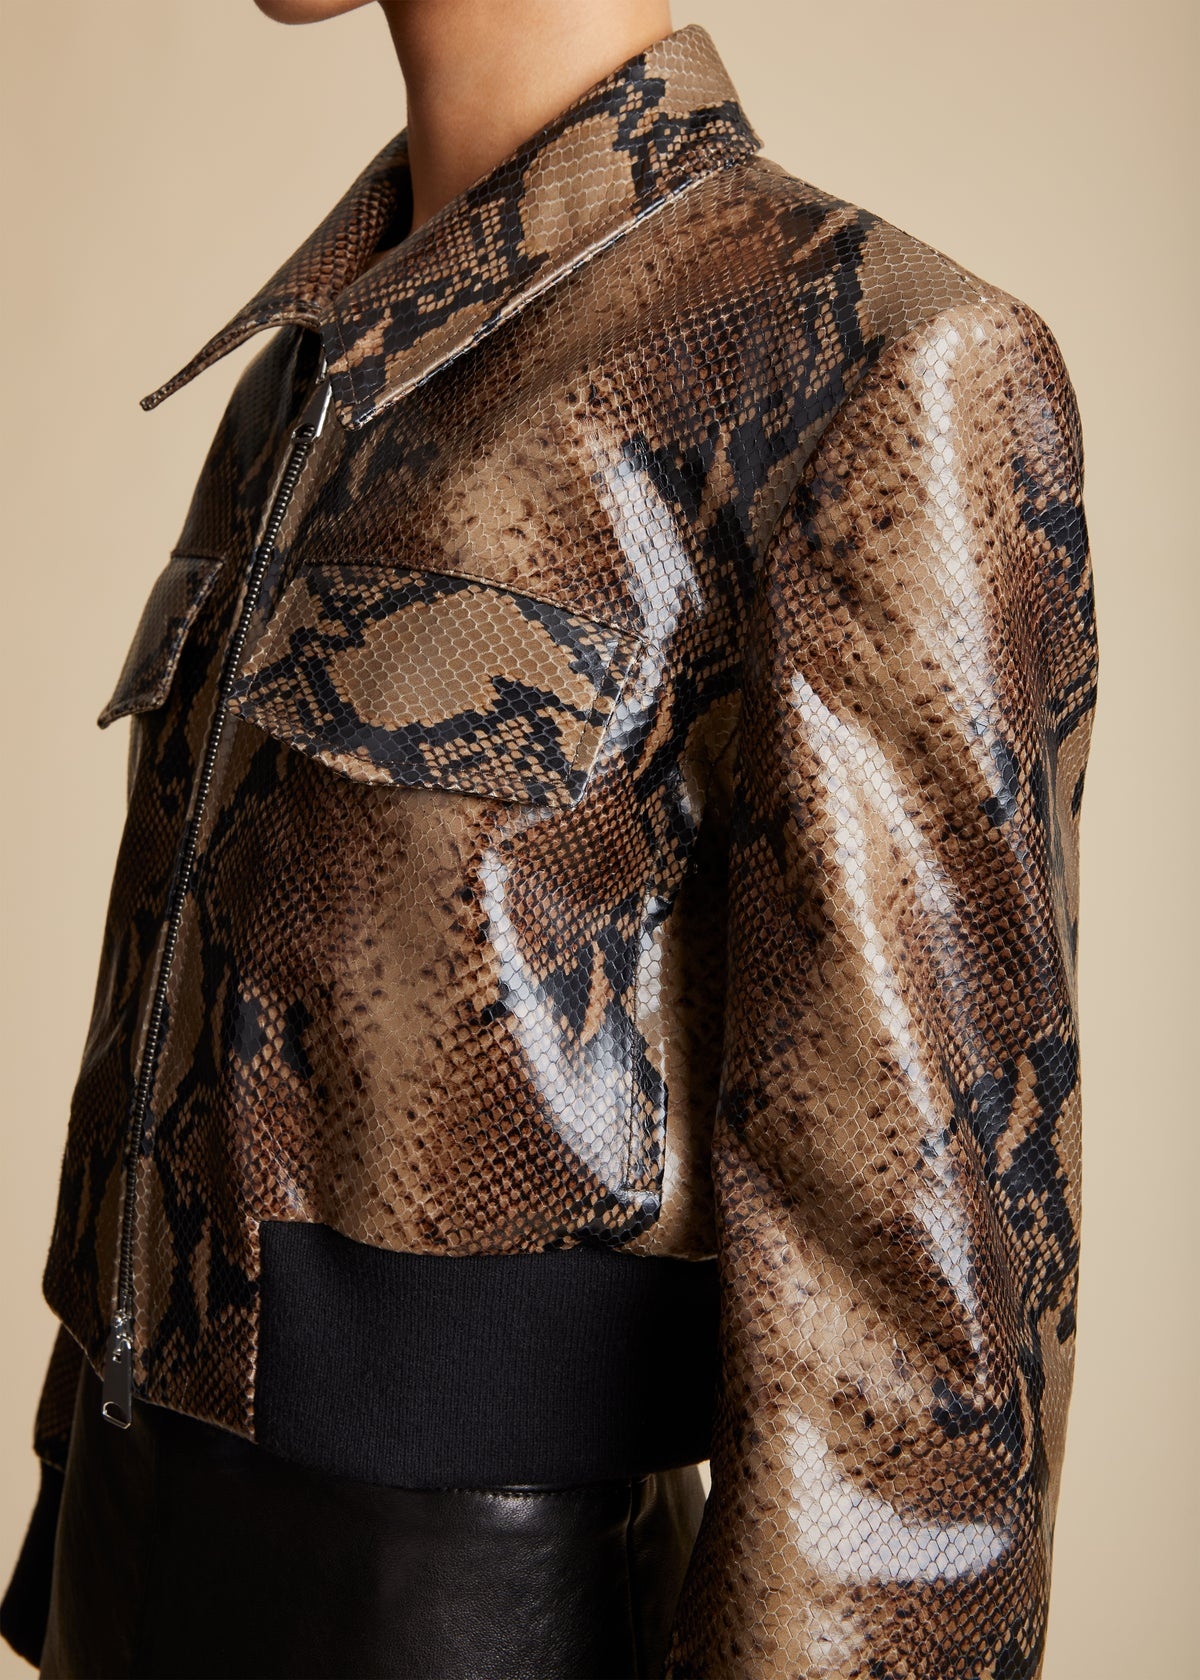 Khaite Women's Hector Embossed Leather Jacket